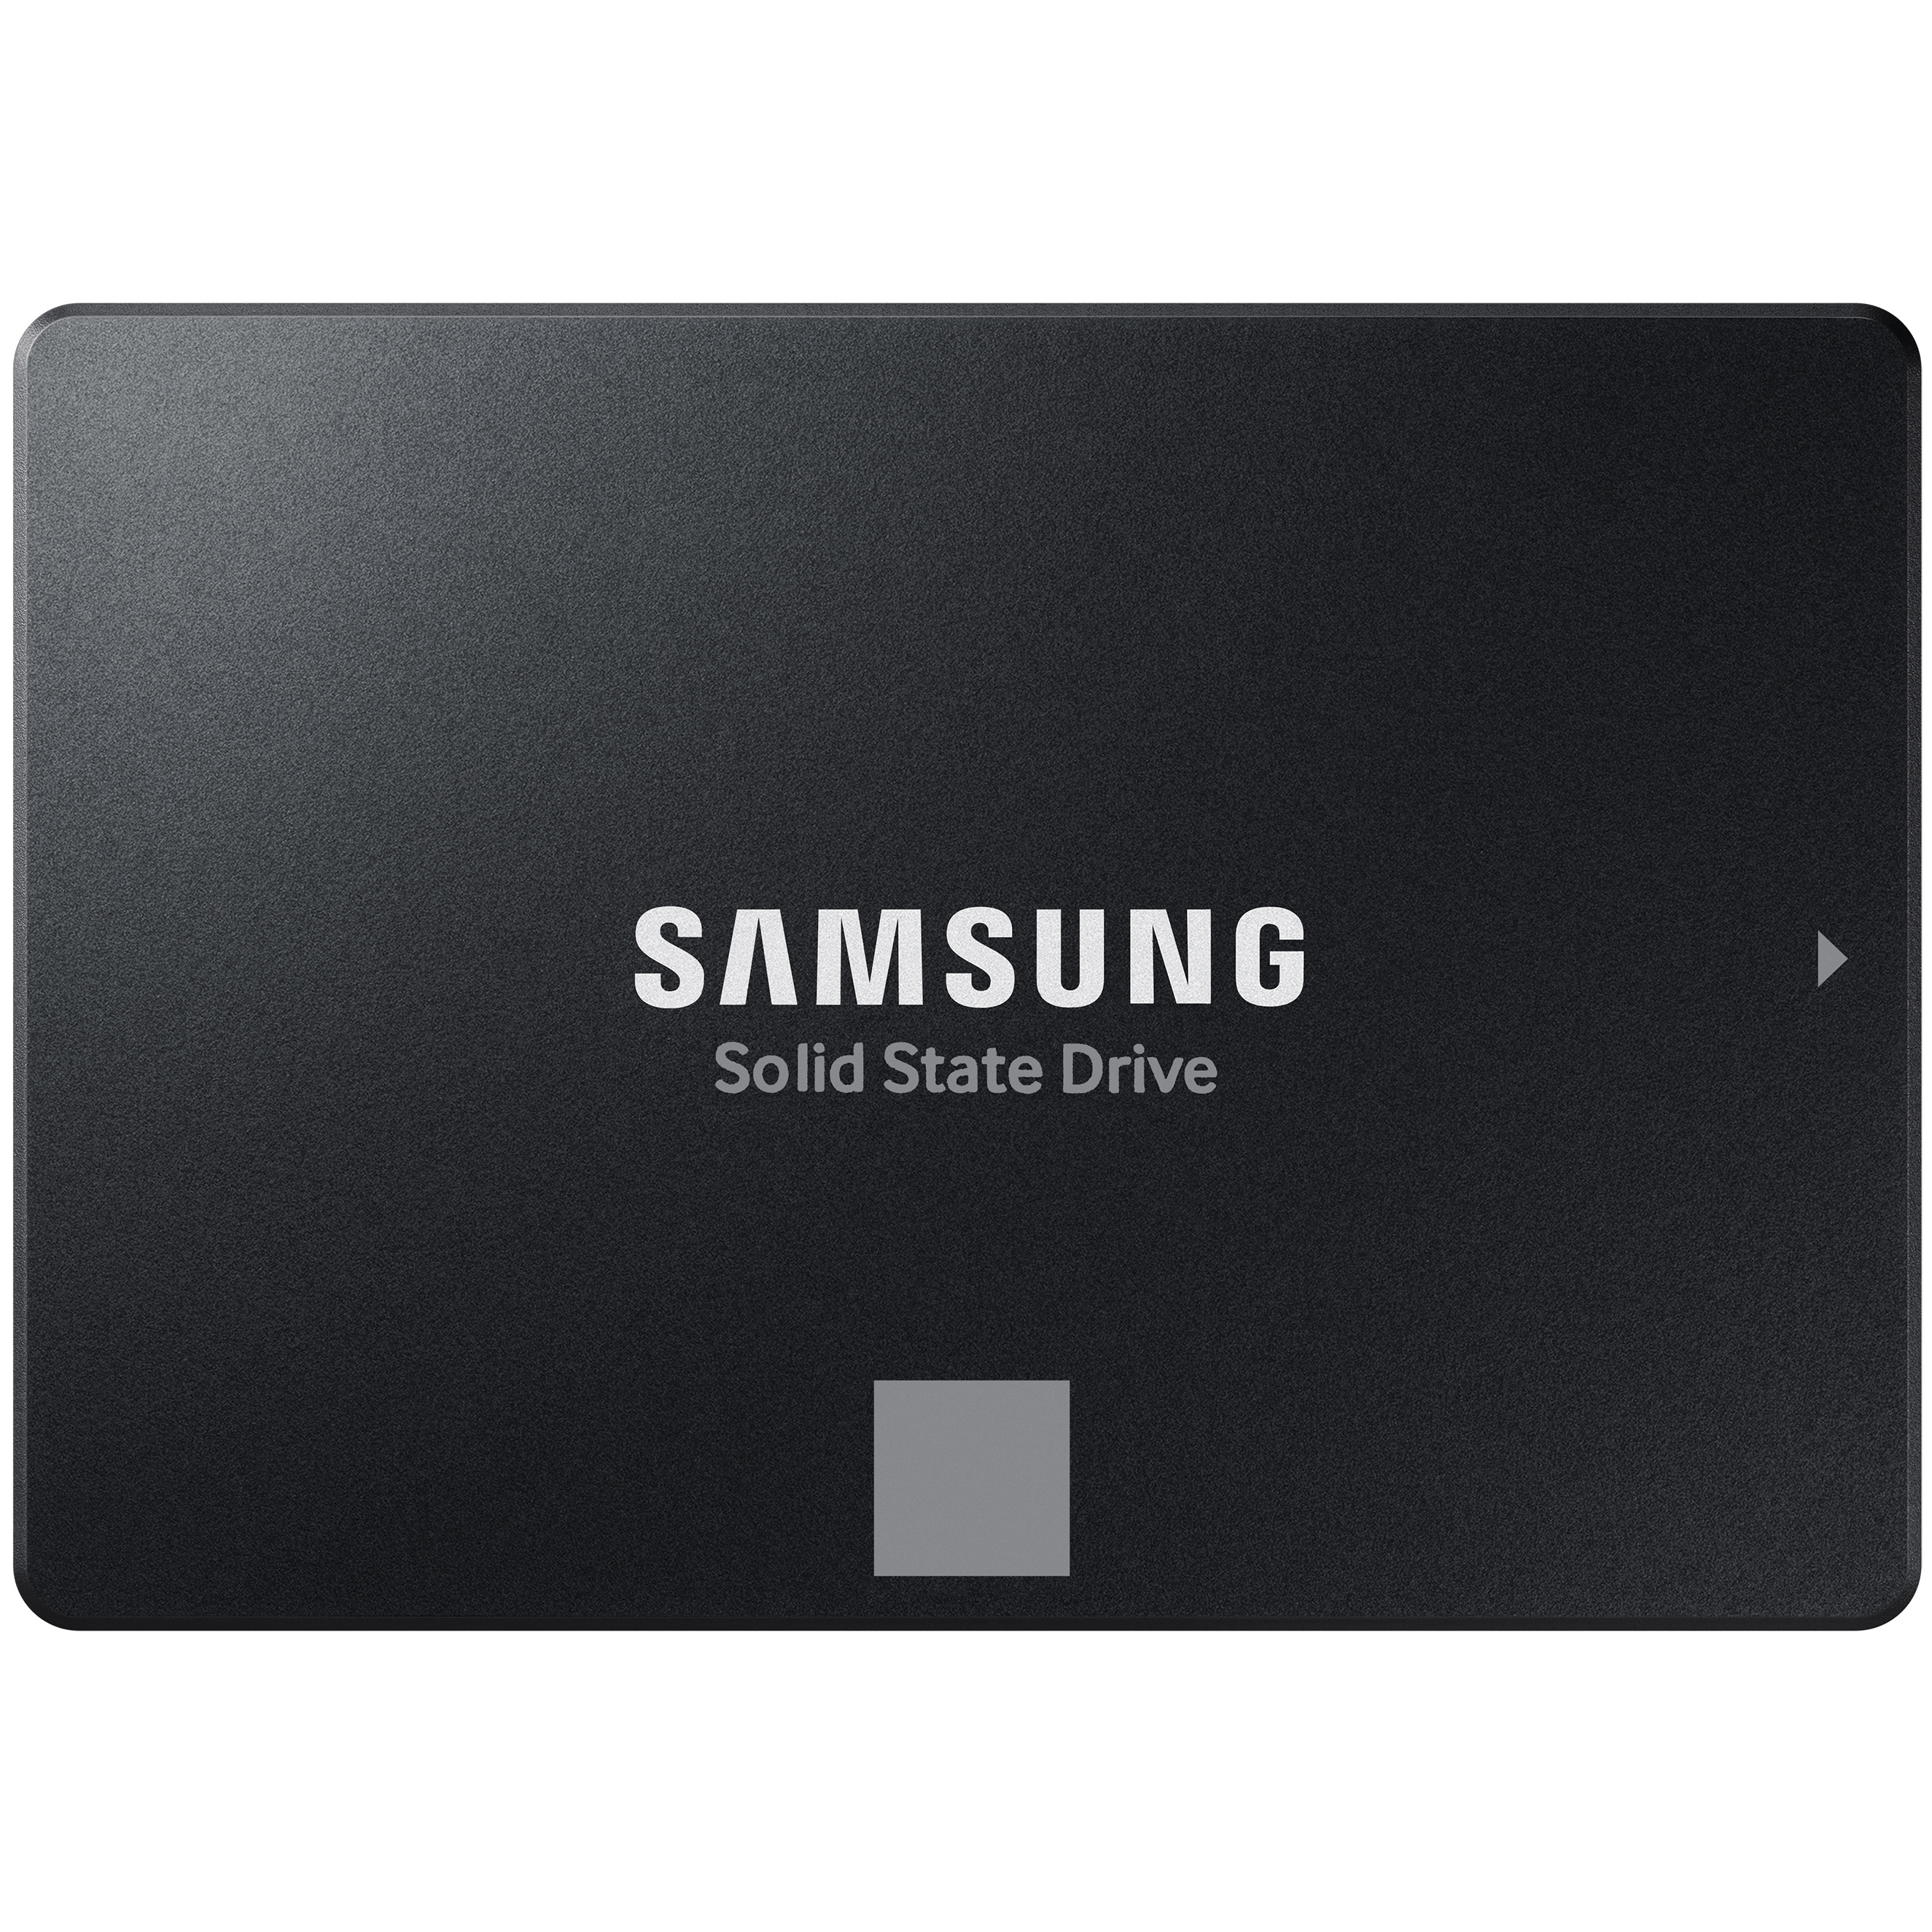 Ổ cứng Samsung 870 Evo Sata III 500GB Hàng nhập khẩu